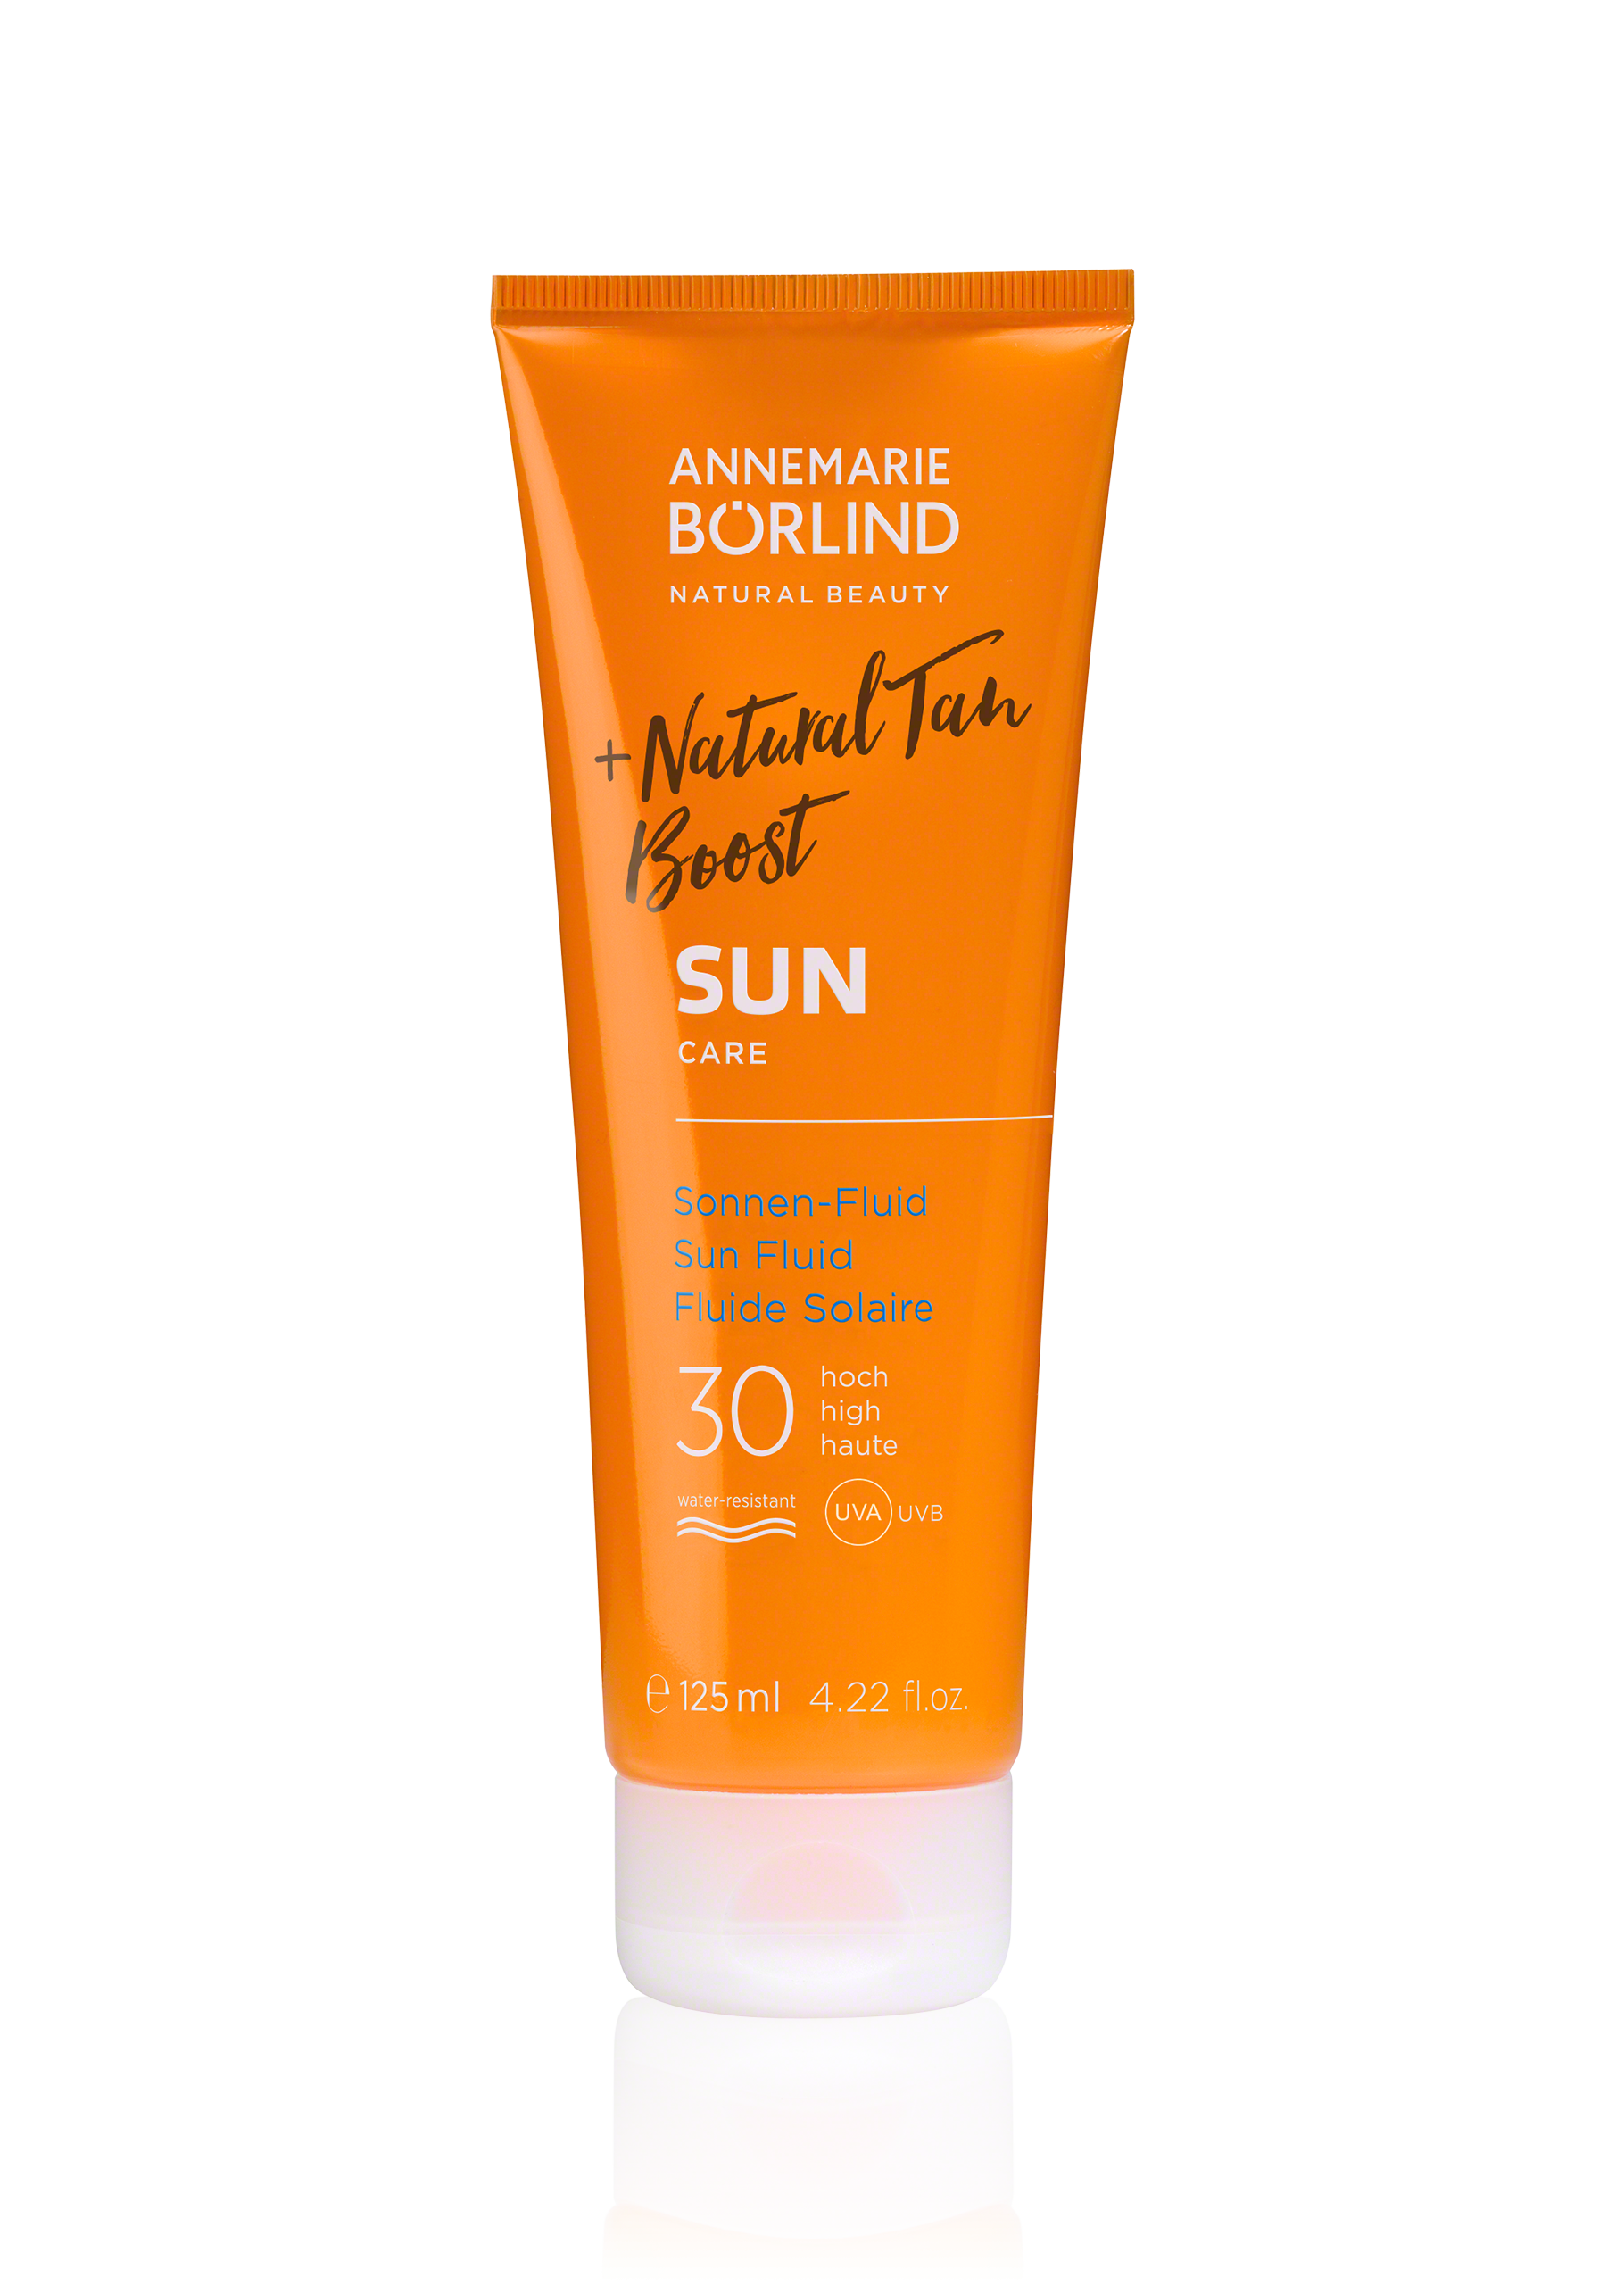 Natural Tan Boost Sun Fluid SPF 30